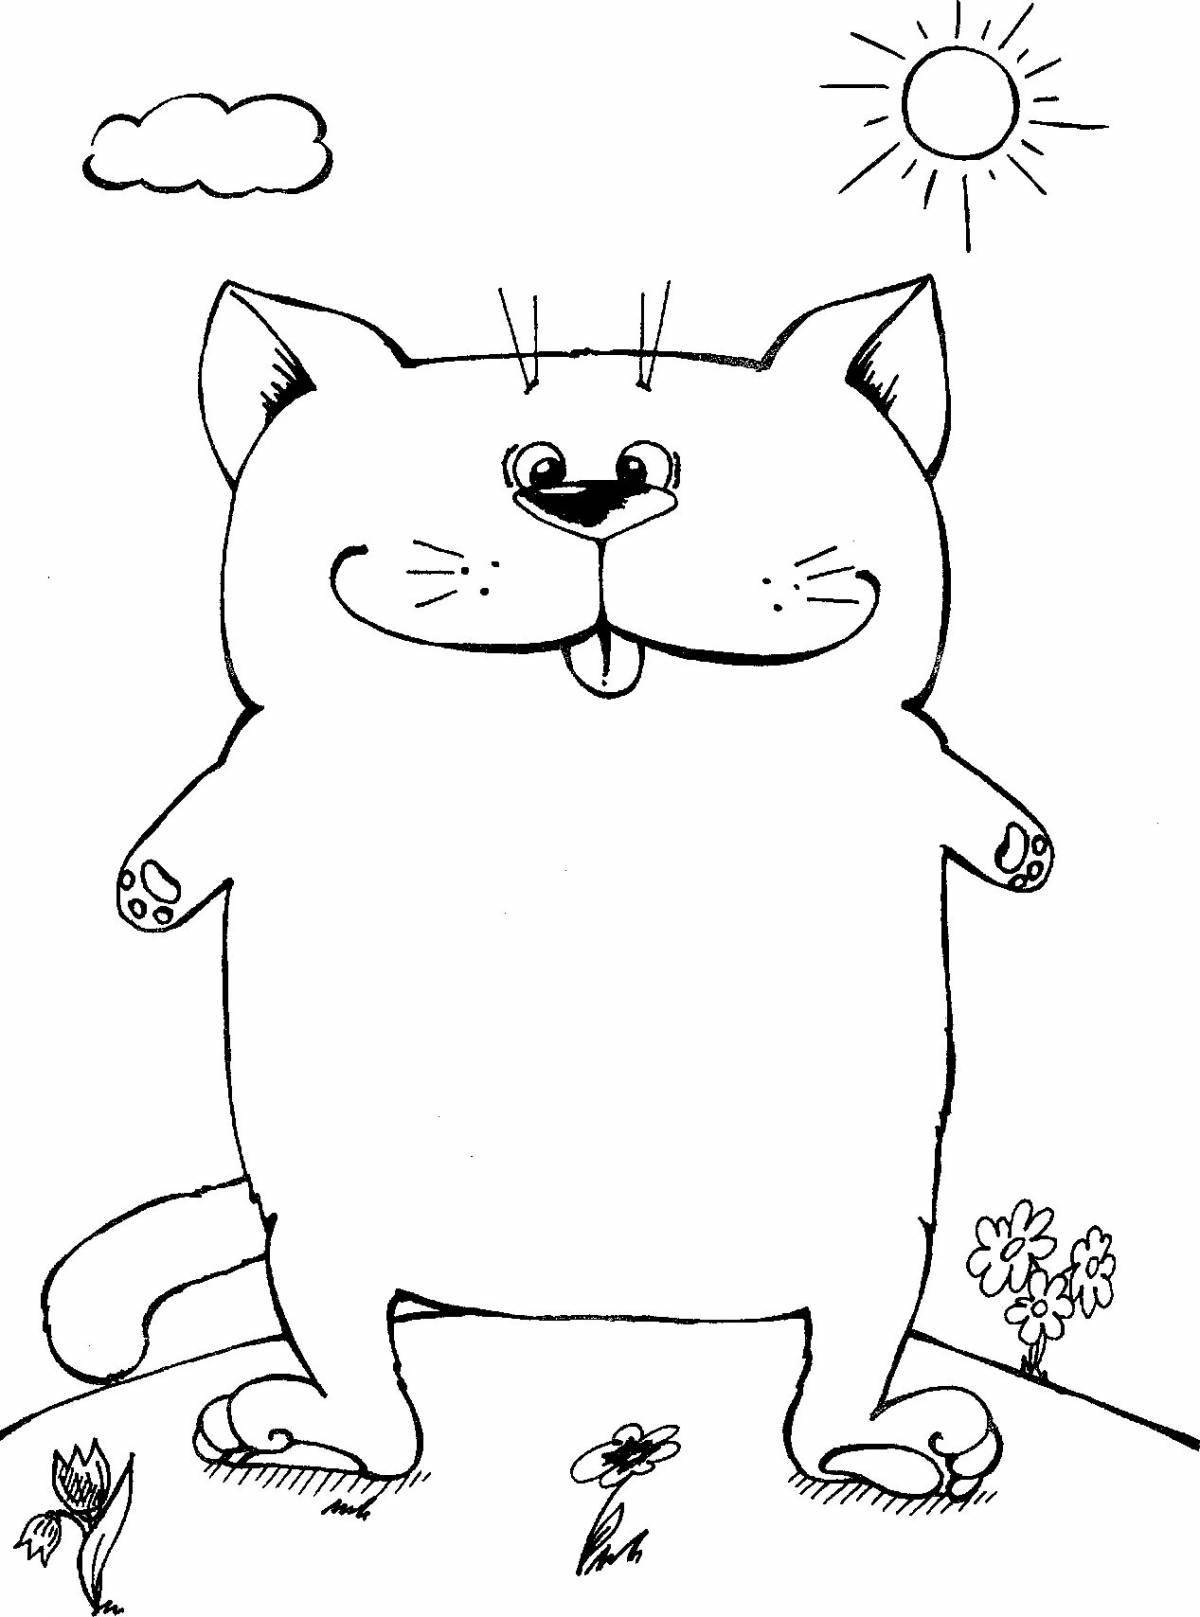 Fat cat #7